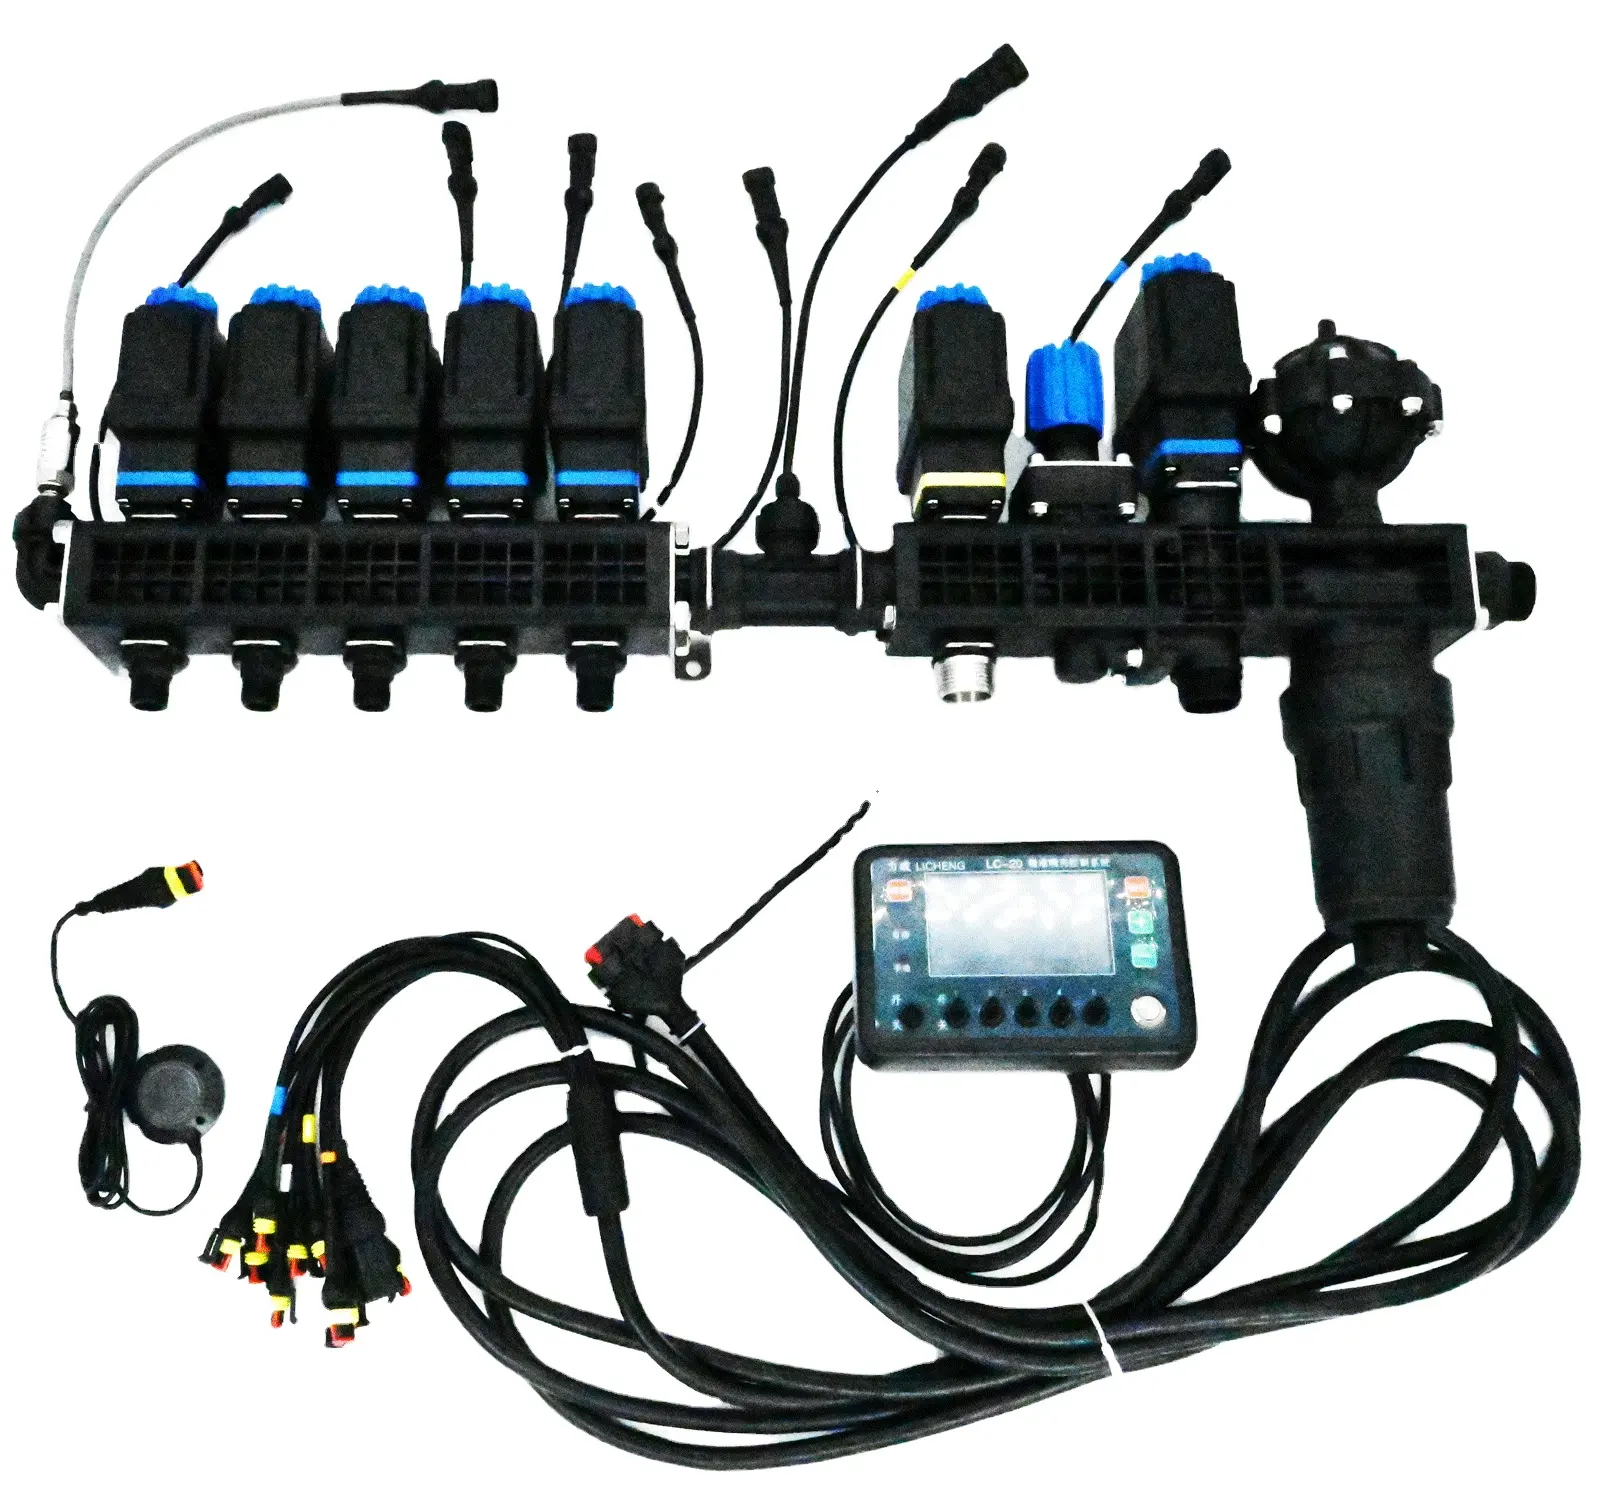 Irrigation accessories boom tractor Quantitative spray valve intelligent control system Reliable quality